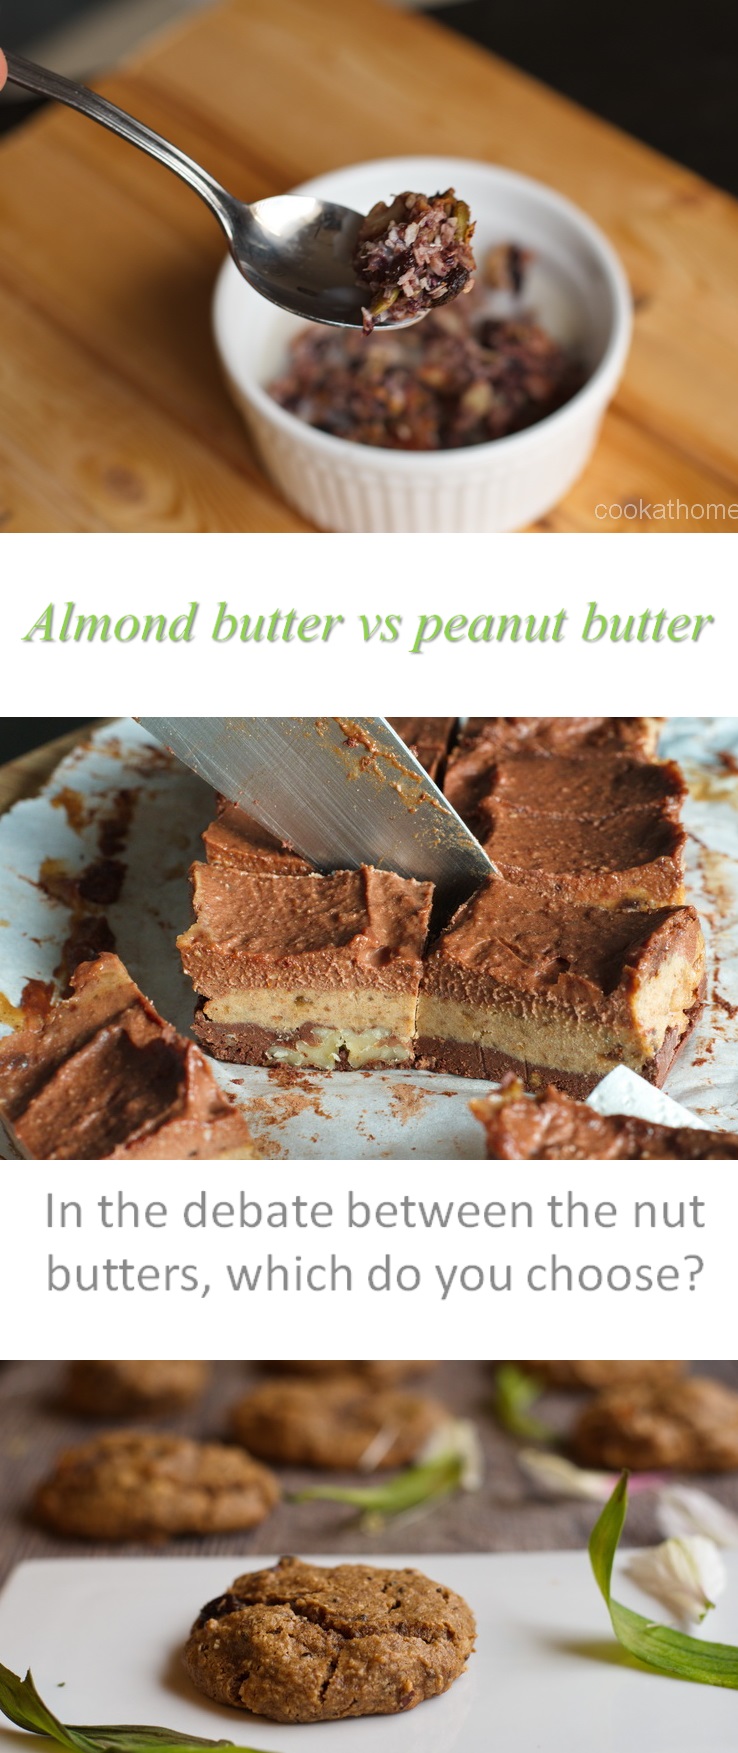 Almond butter vs peanut butter - which do you prefer? #almondbutter